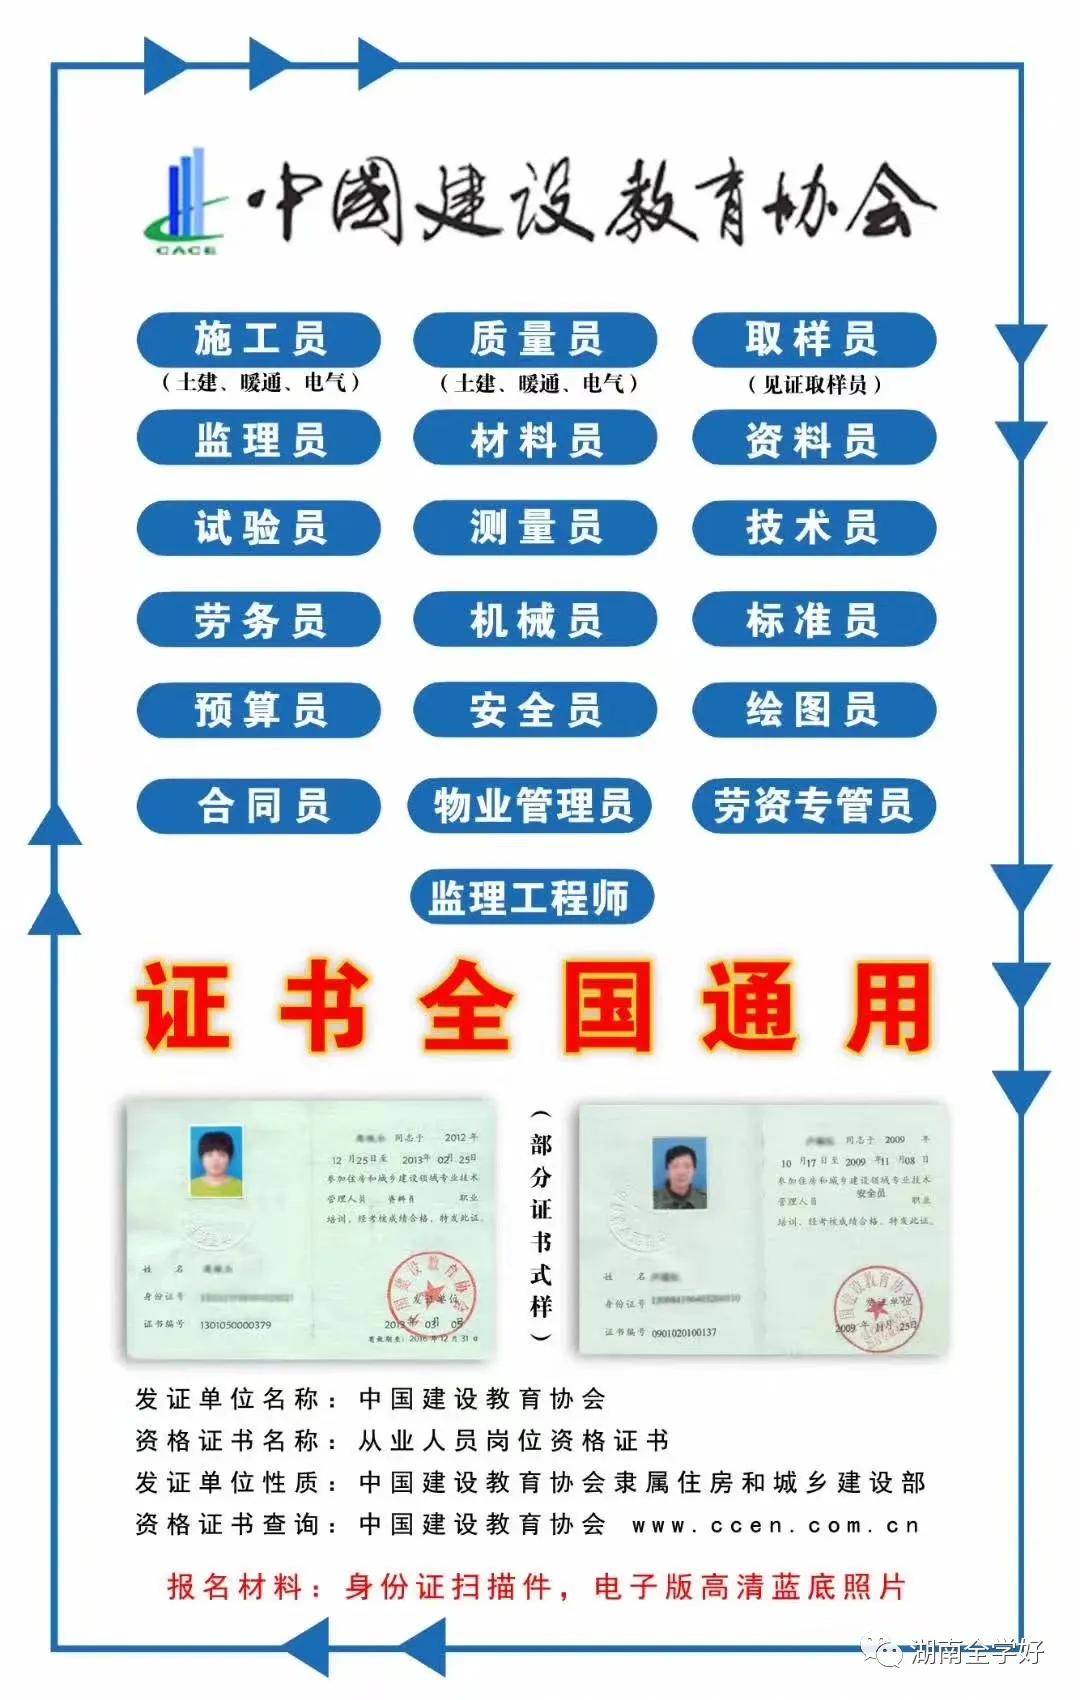 cn/中国建设教育协会发的相关岗位证书就